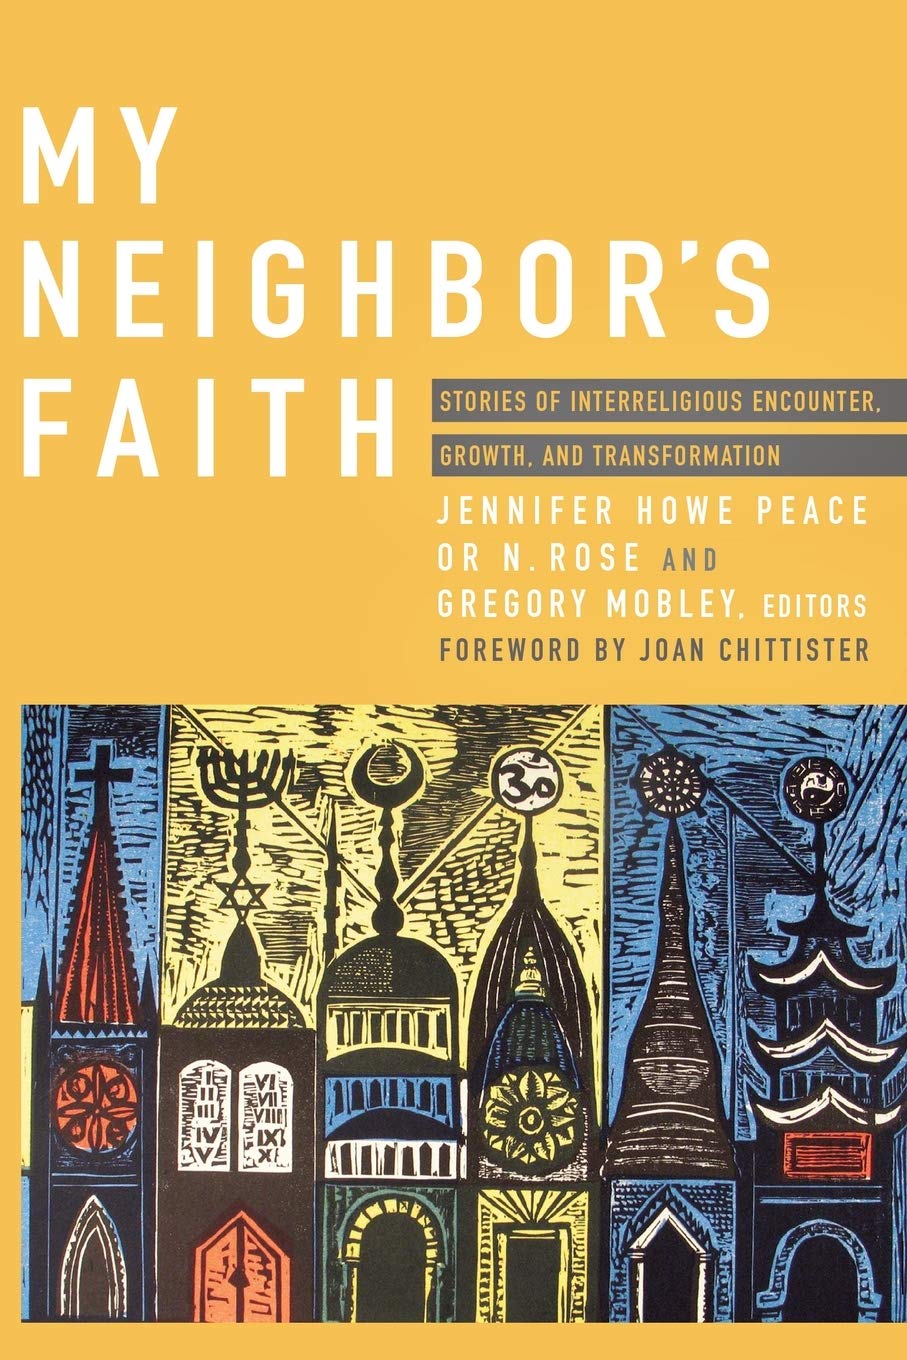 My Neighbor's Faith: Stories of Interreligious Encounter  Growth  and Transformation